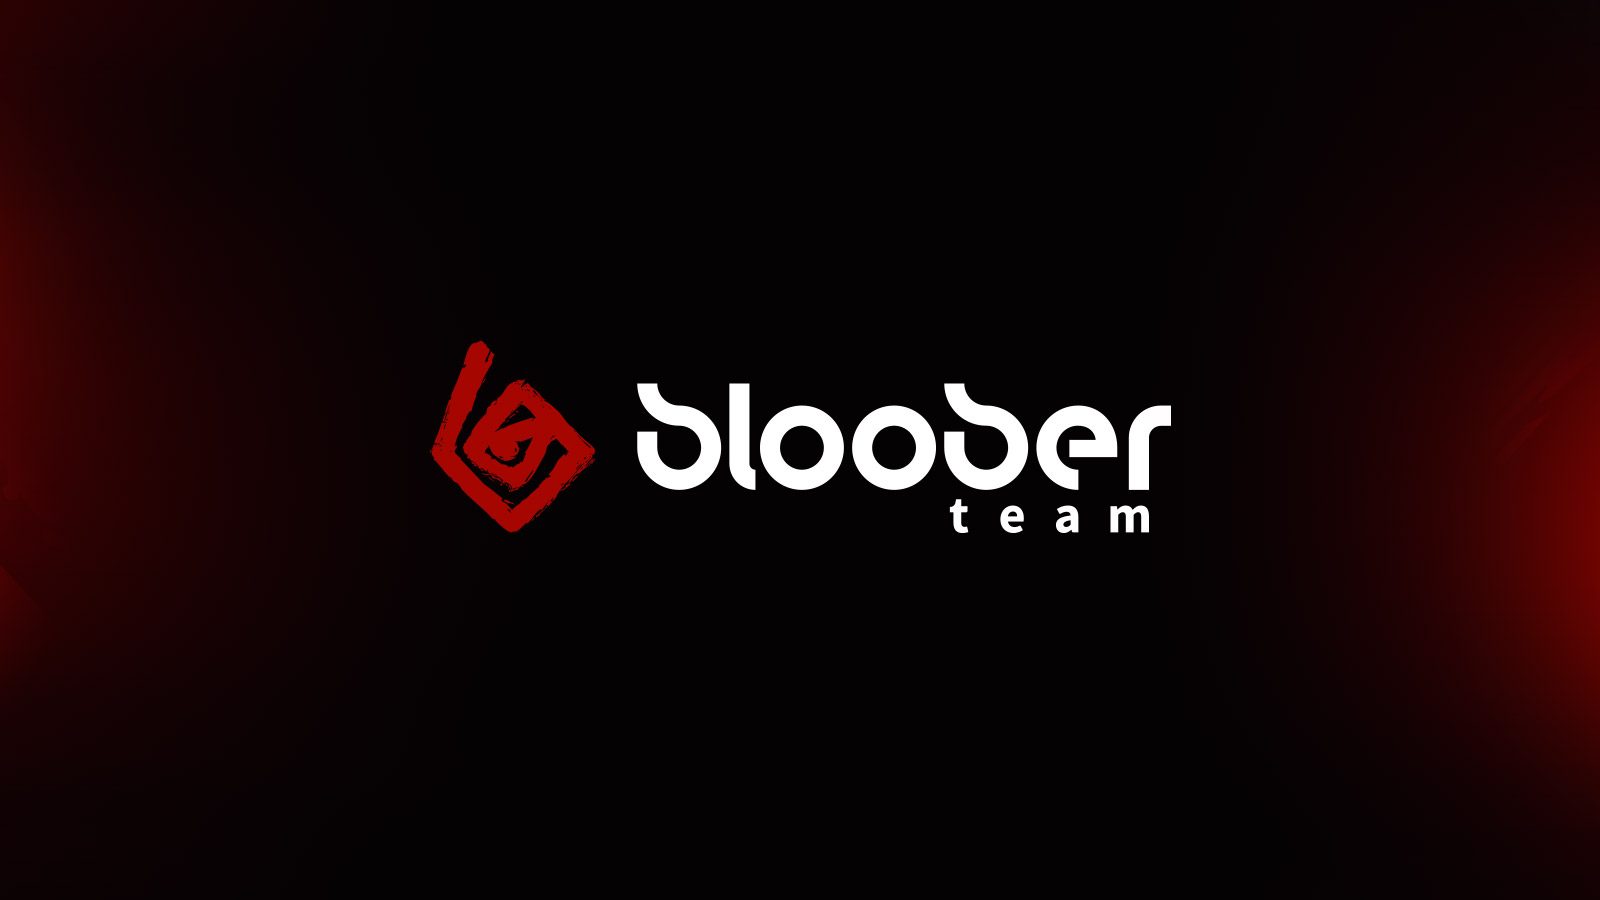 Bloober Team ผนึกกำลัง Take-Two Interactive พัฒนาเกมสยองขวัญ